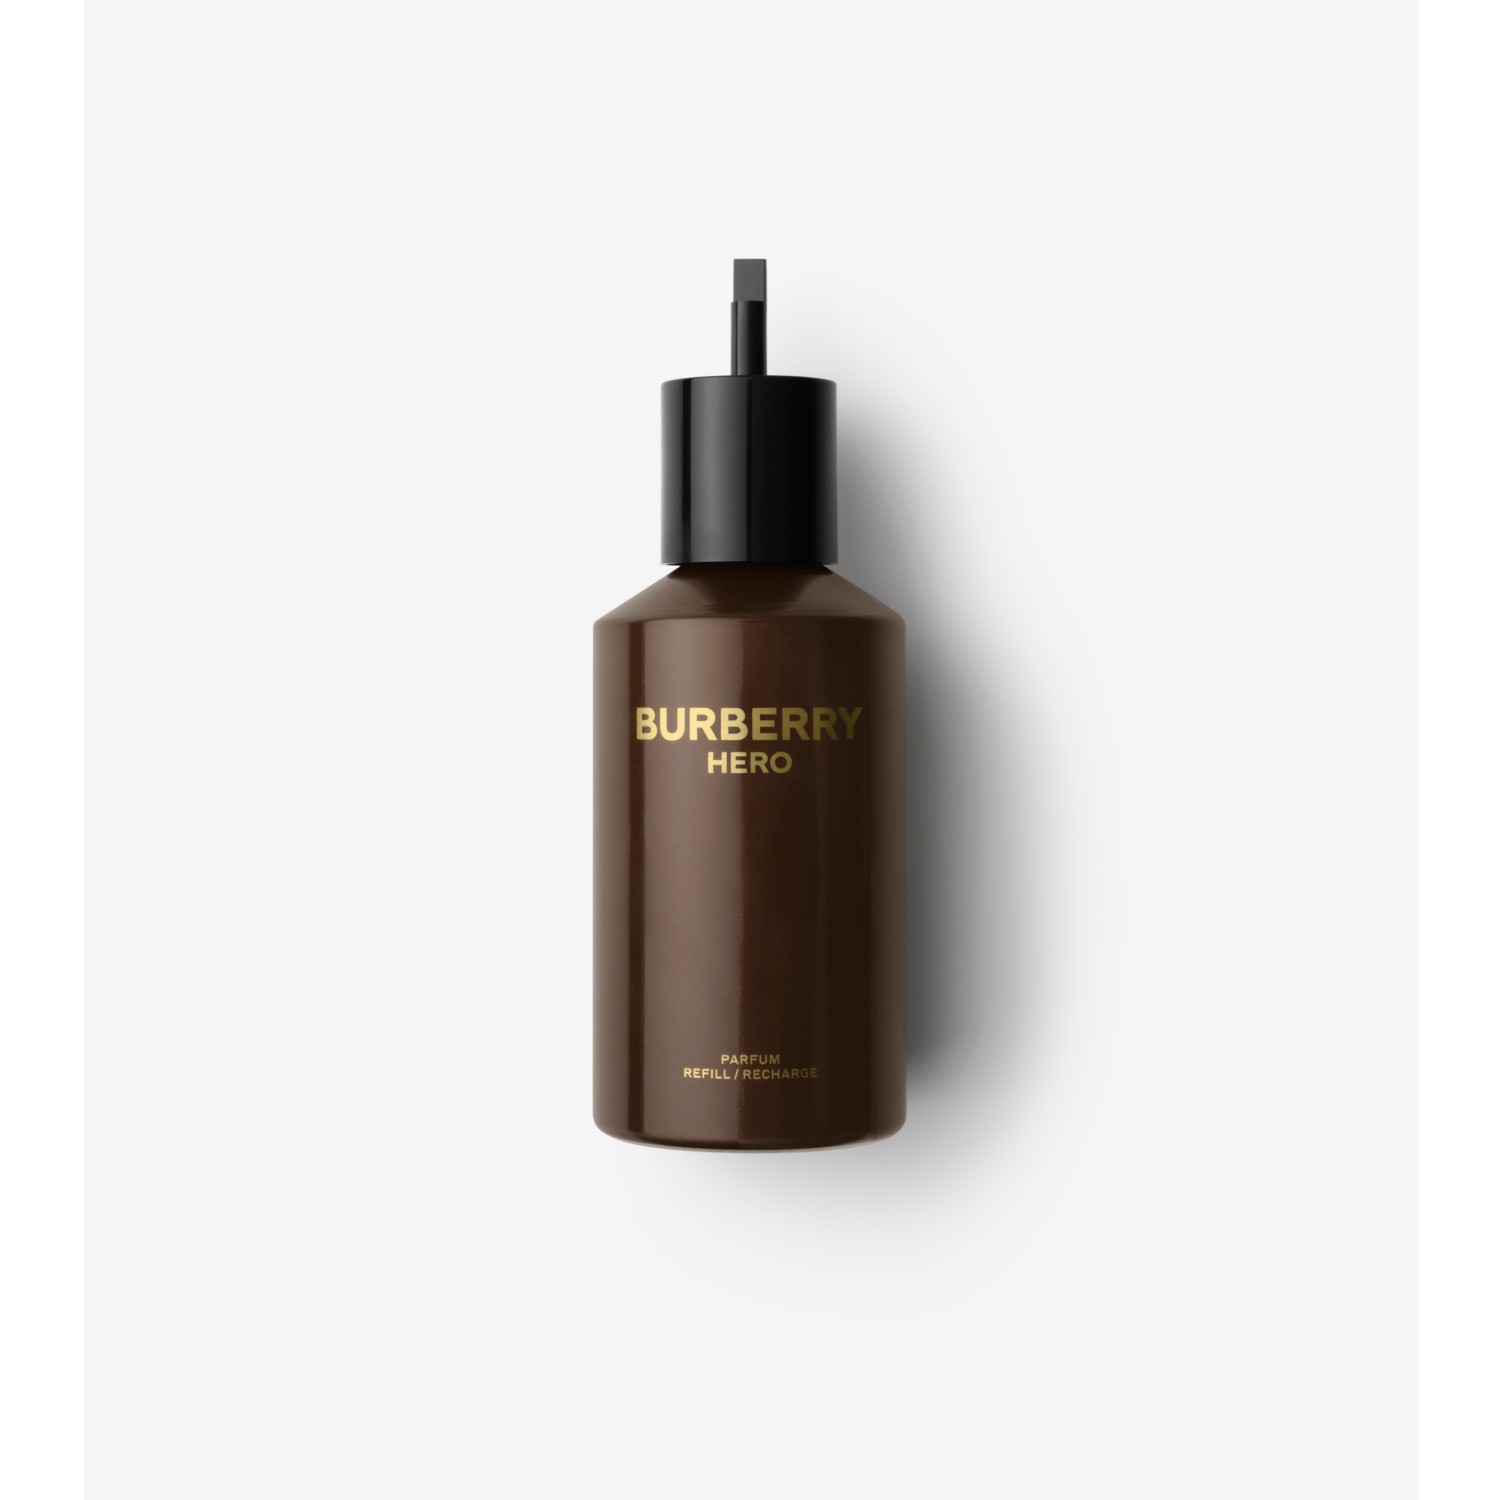 Burberry Hero Parfum Refill 200ml